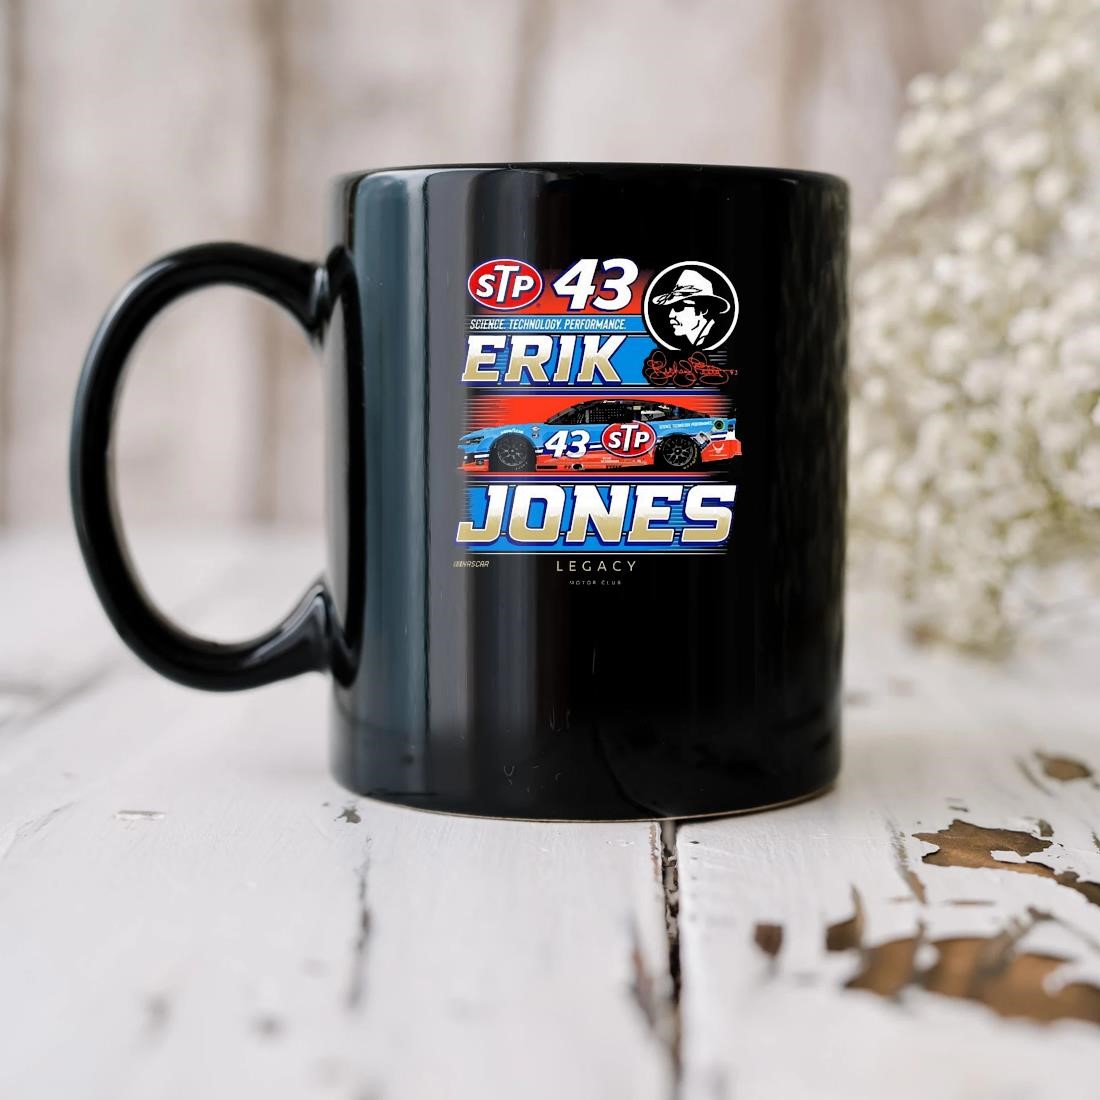 Erik Jones Legacy Motor Club Team Collection Stp Mug biu.jpg